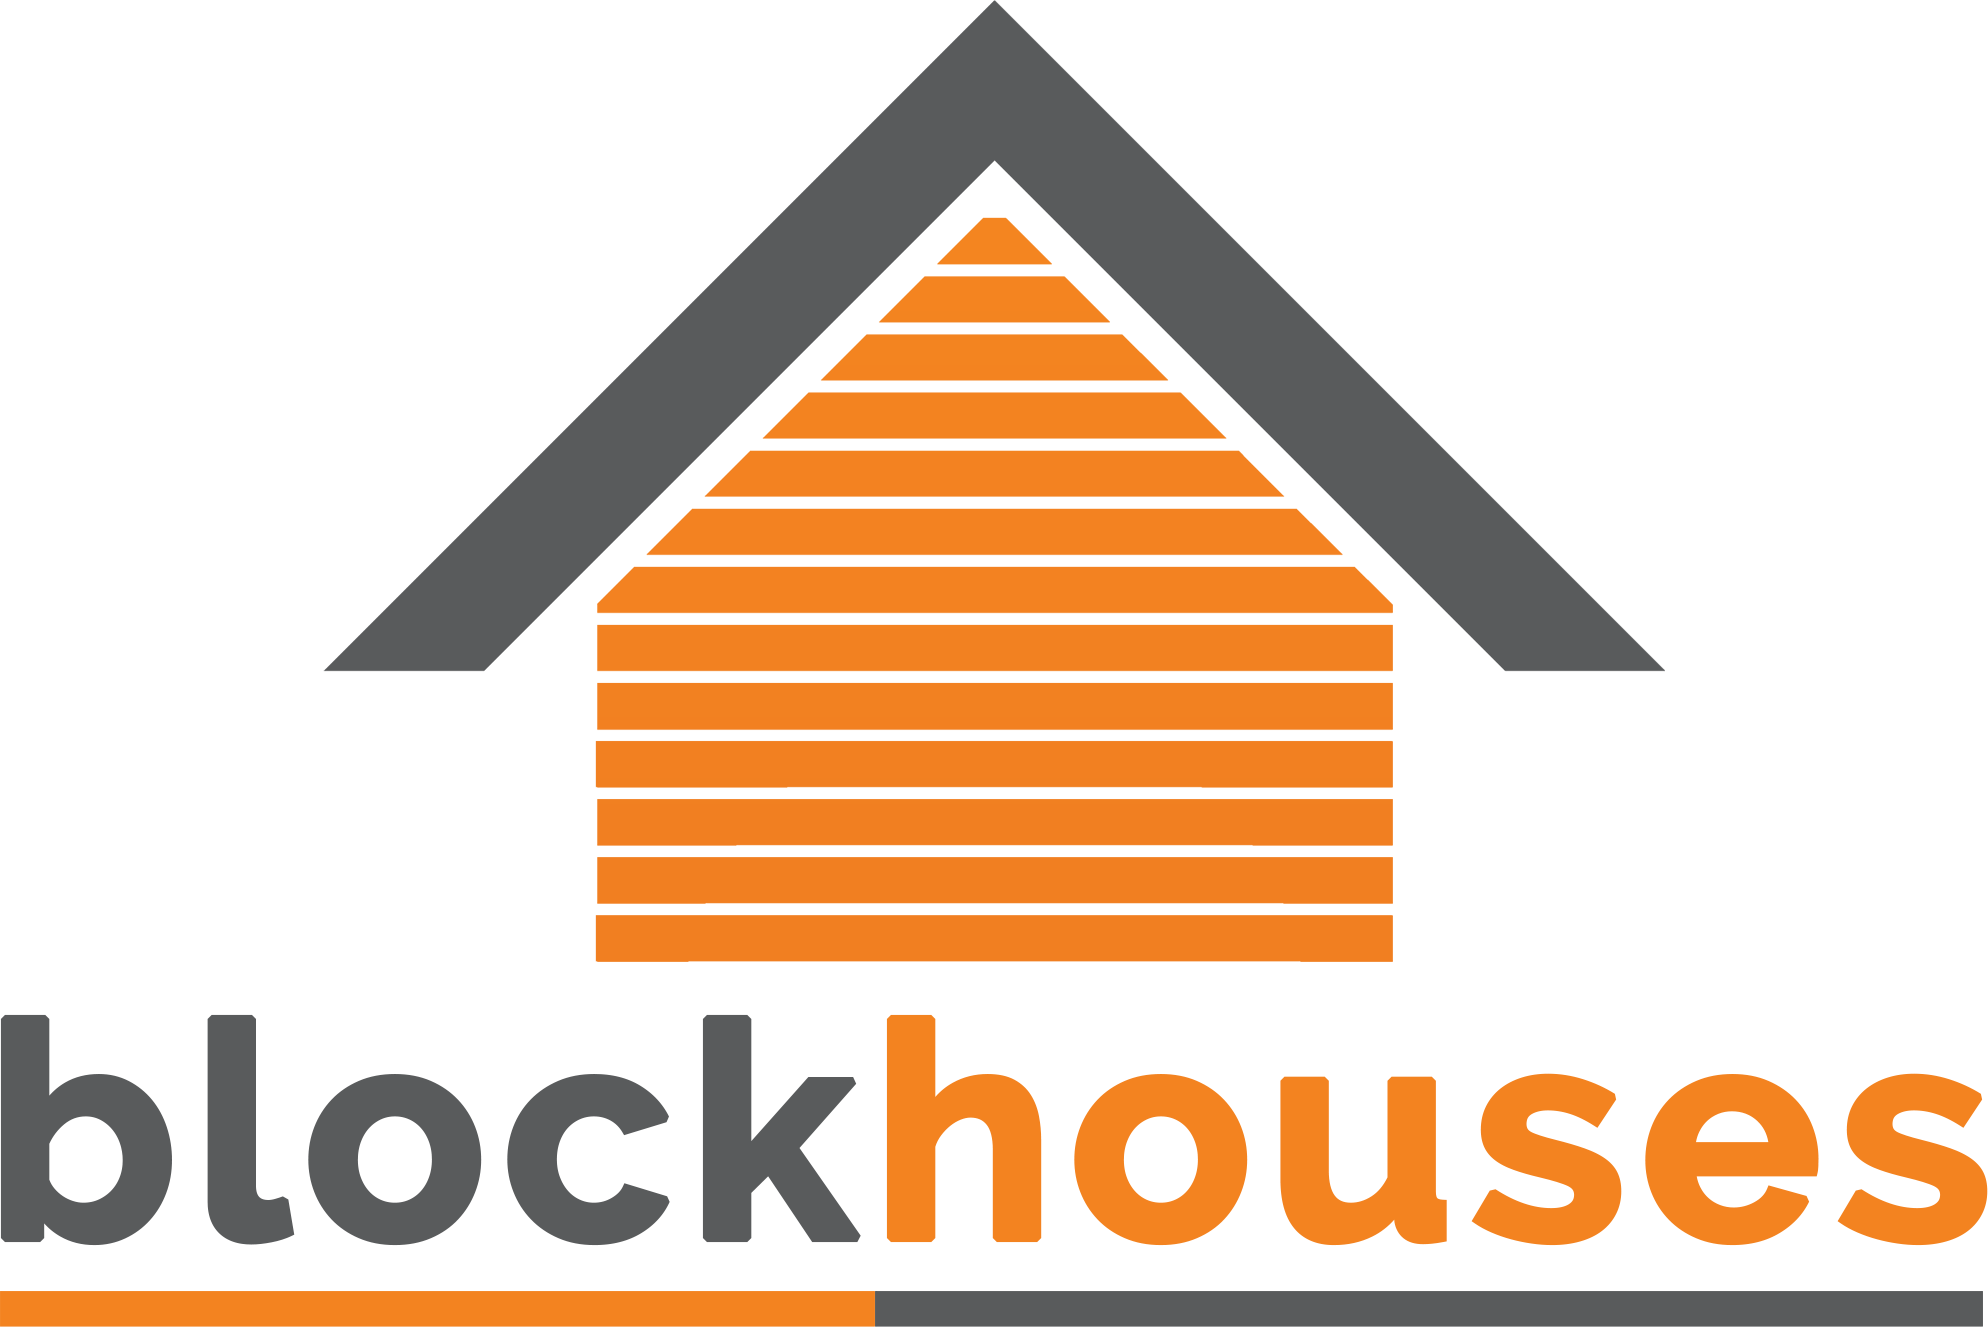 Blockhouses logo